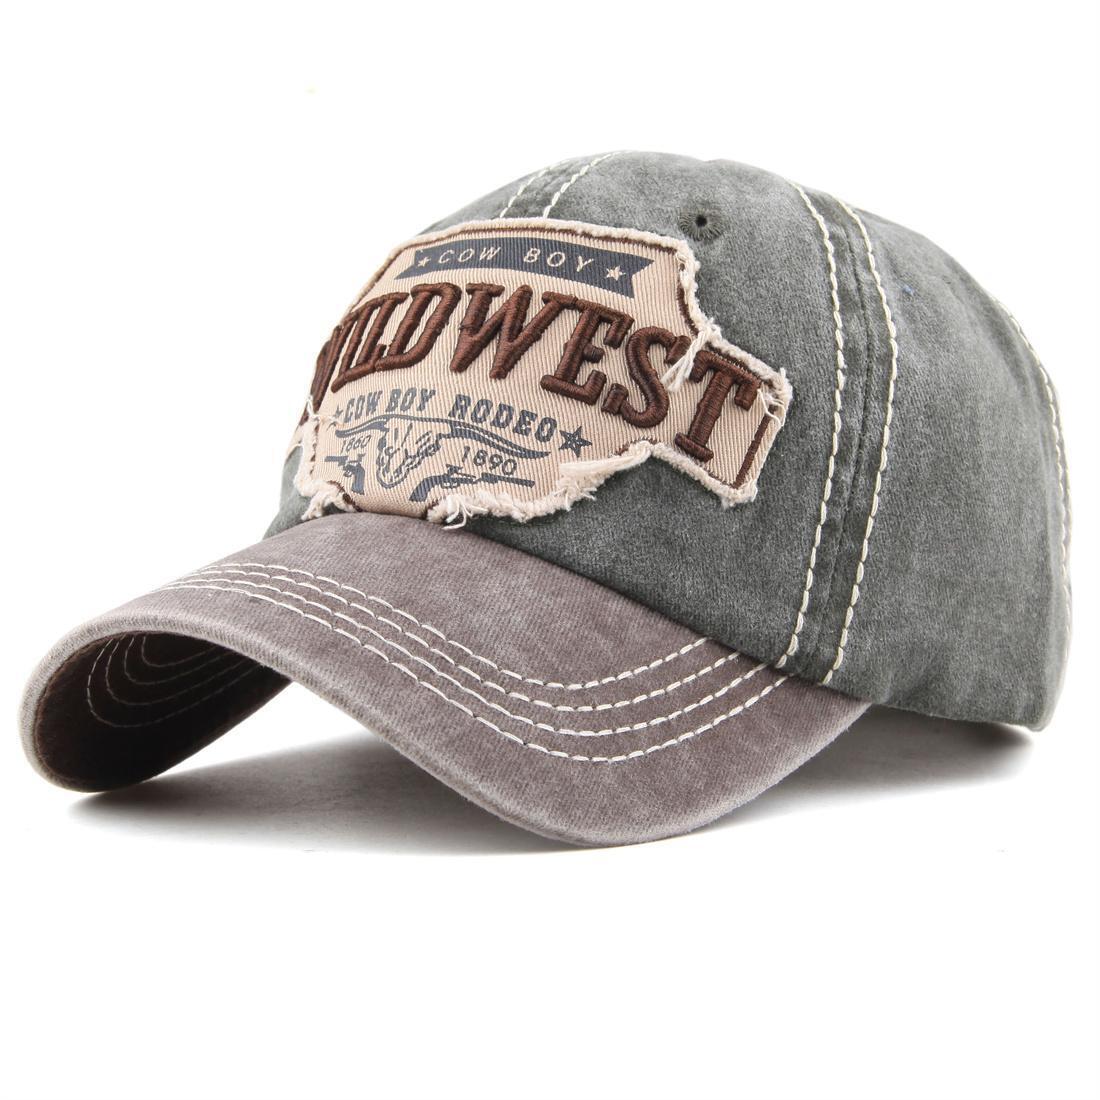 Mens Baseball Cap Classic Trucker Hat Wild West Embroidered Adjustable Visor